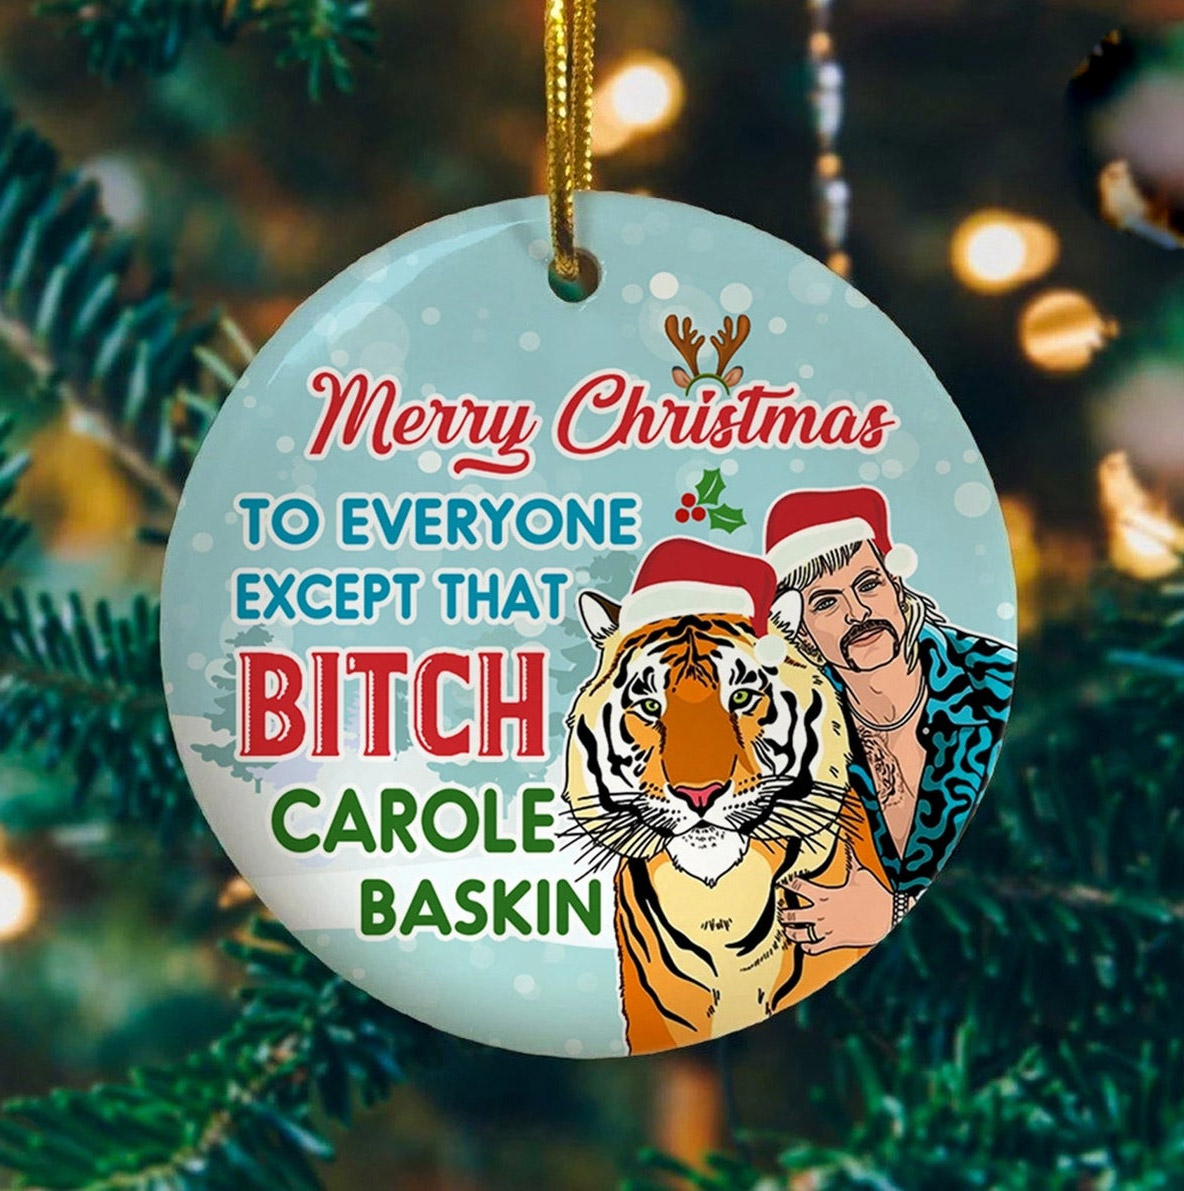 Merry Christmas To Everyone Except Carol Baskin - Tiger King Christmas Ornament